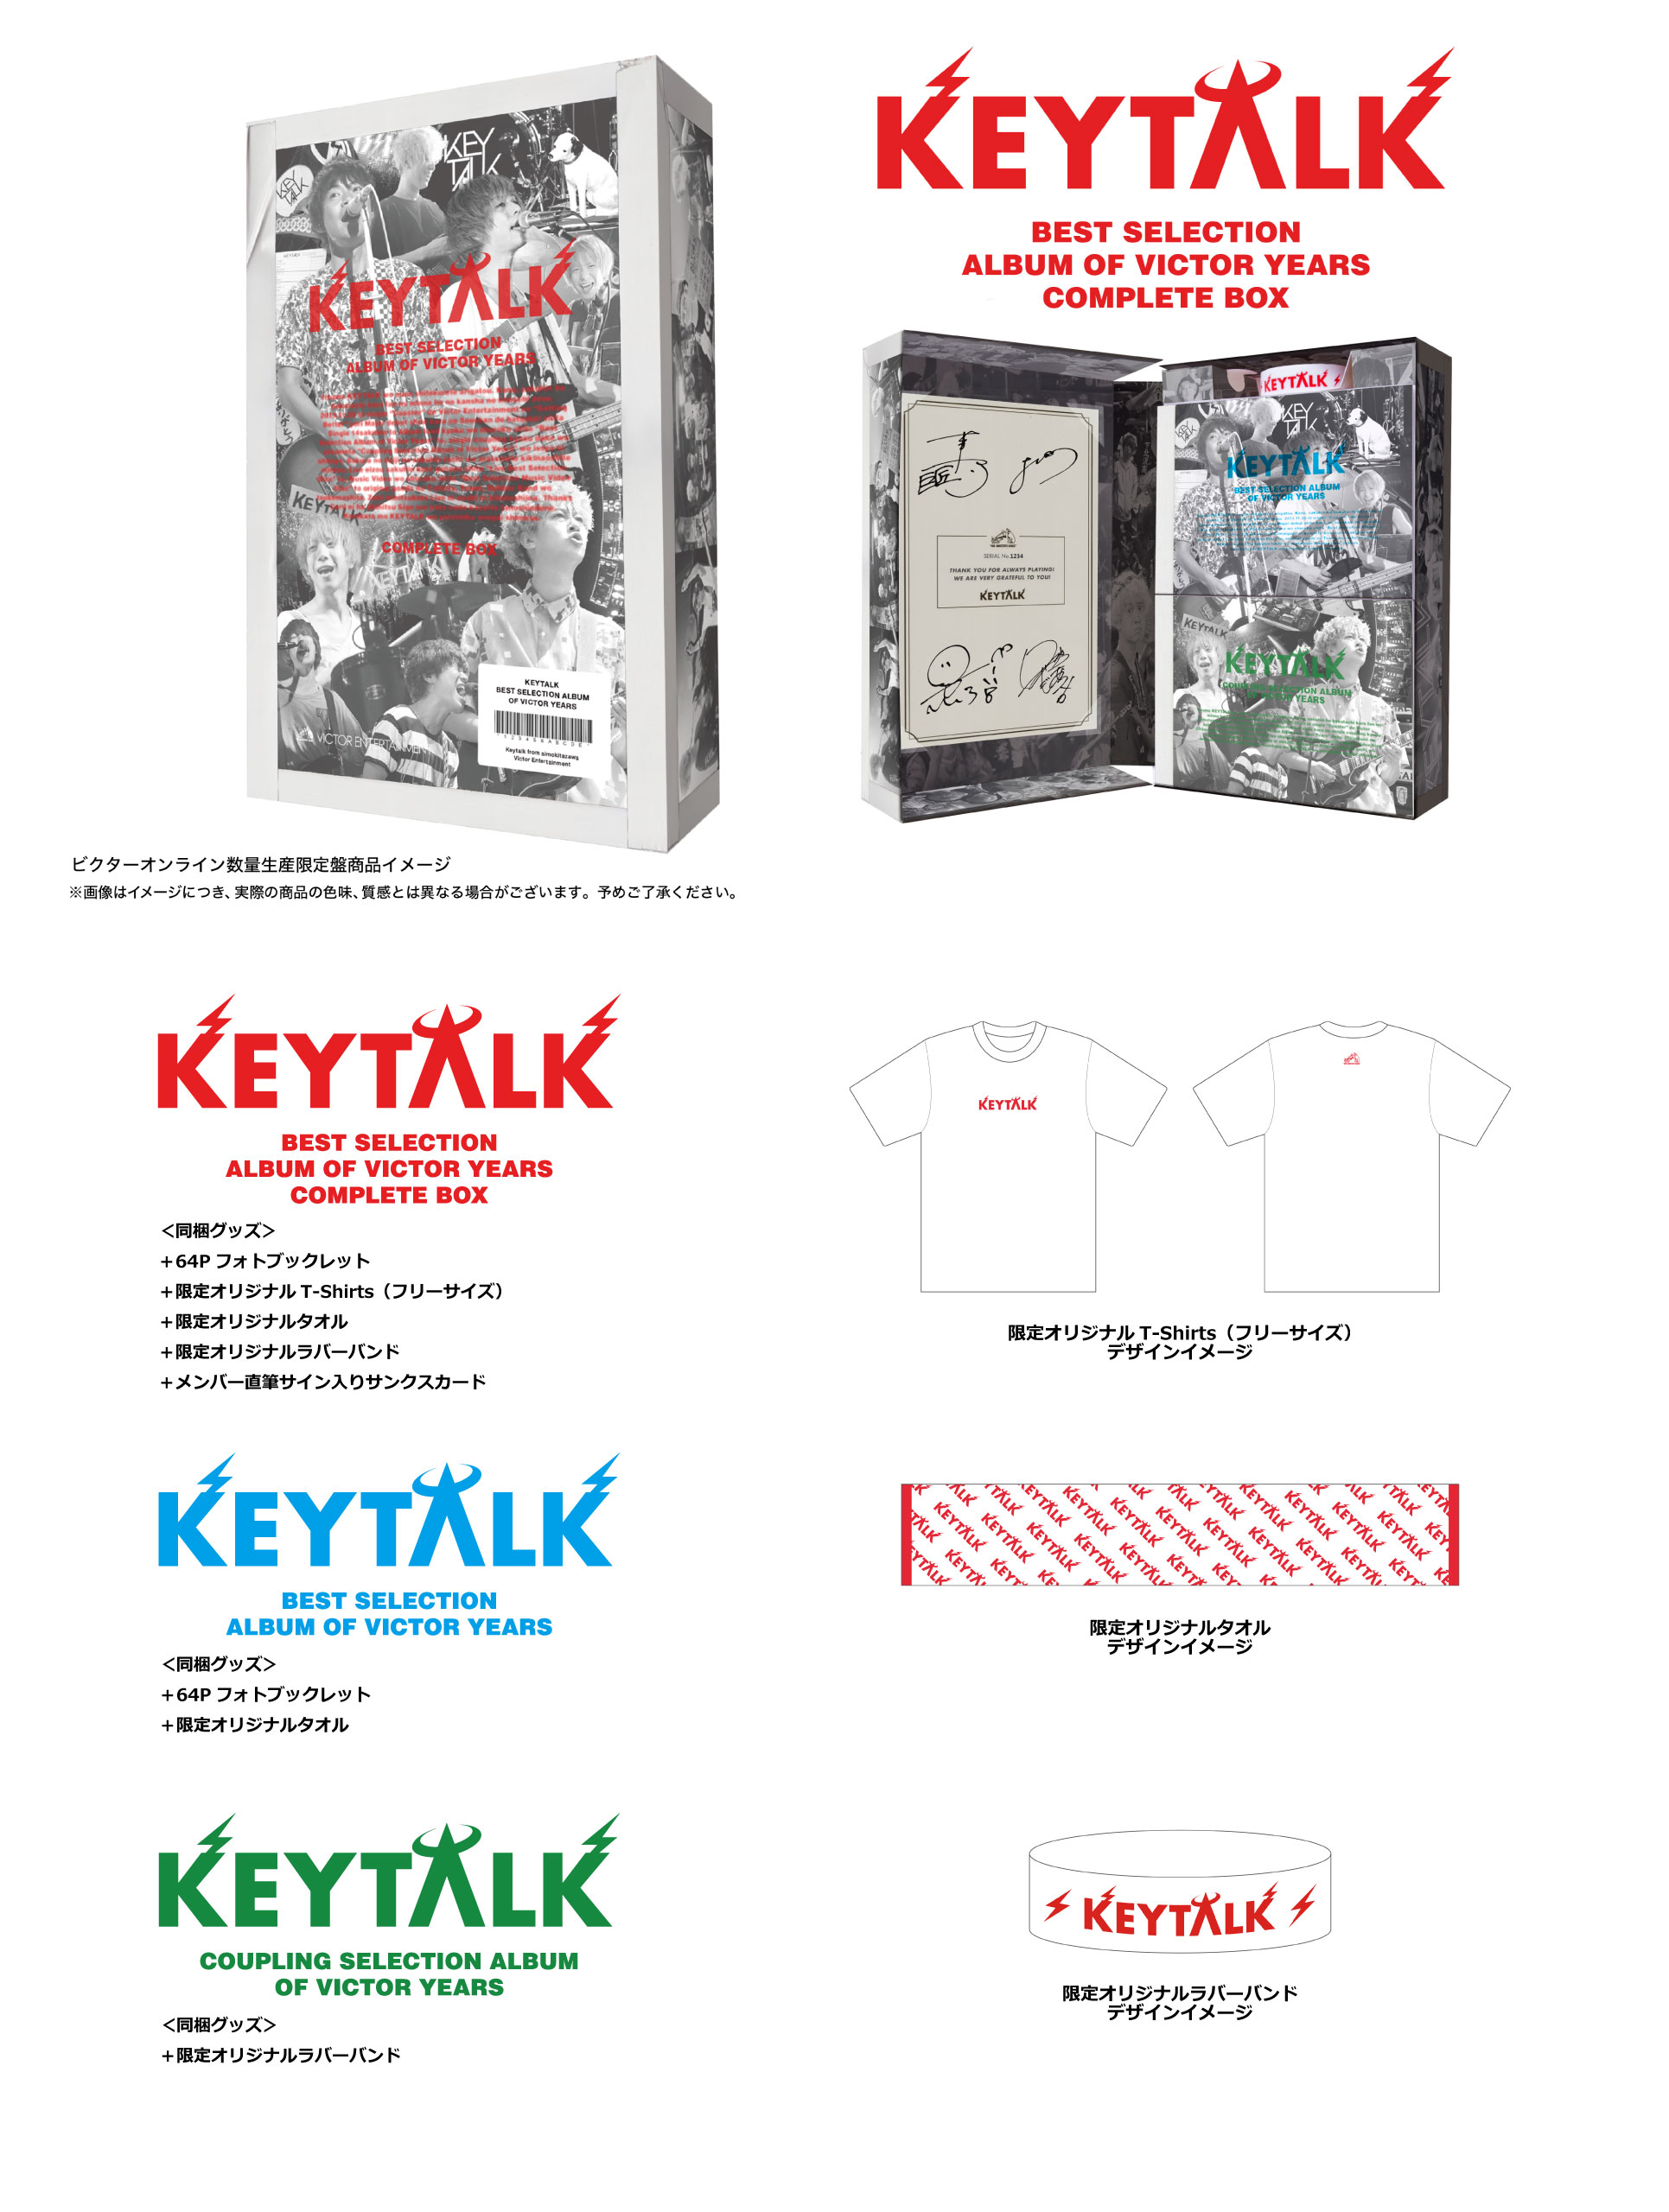 KEYTALK初となるベスト盤、3月18日(水) 3タイトル同時発売決定！